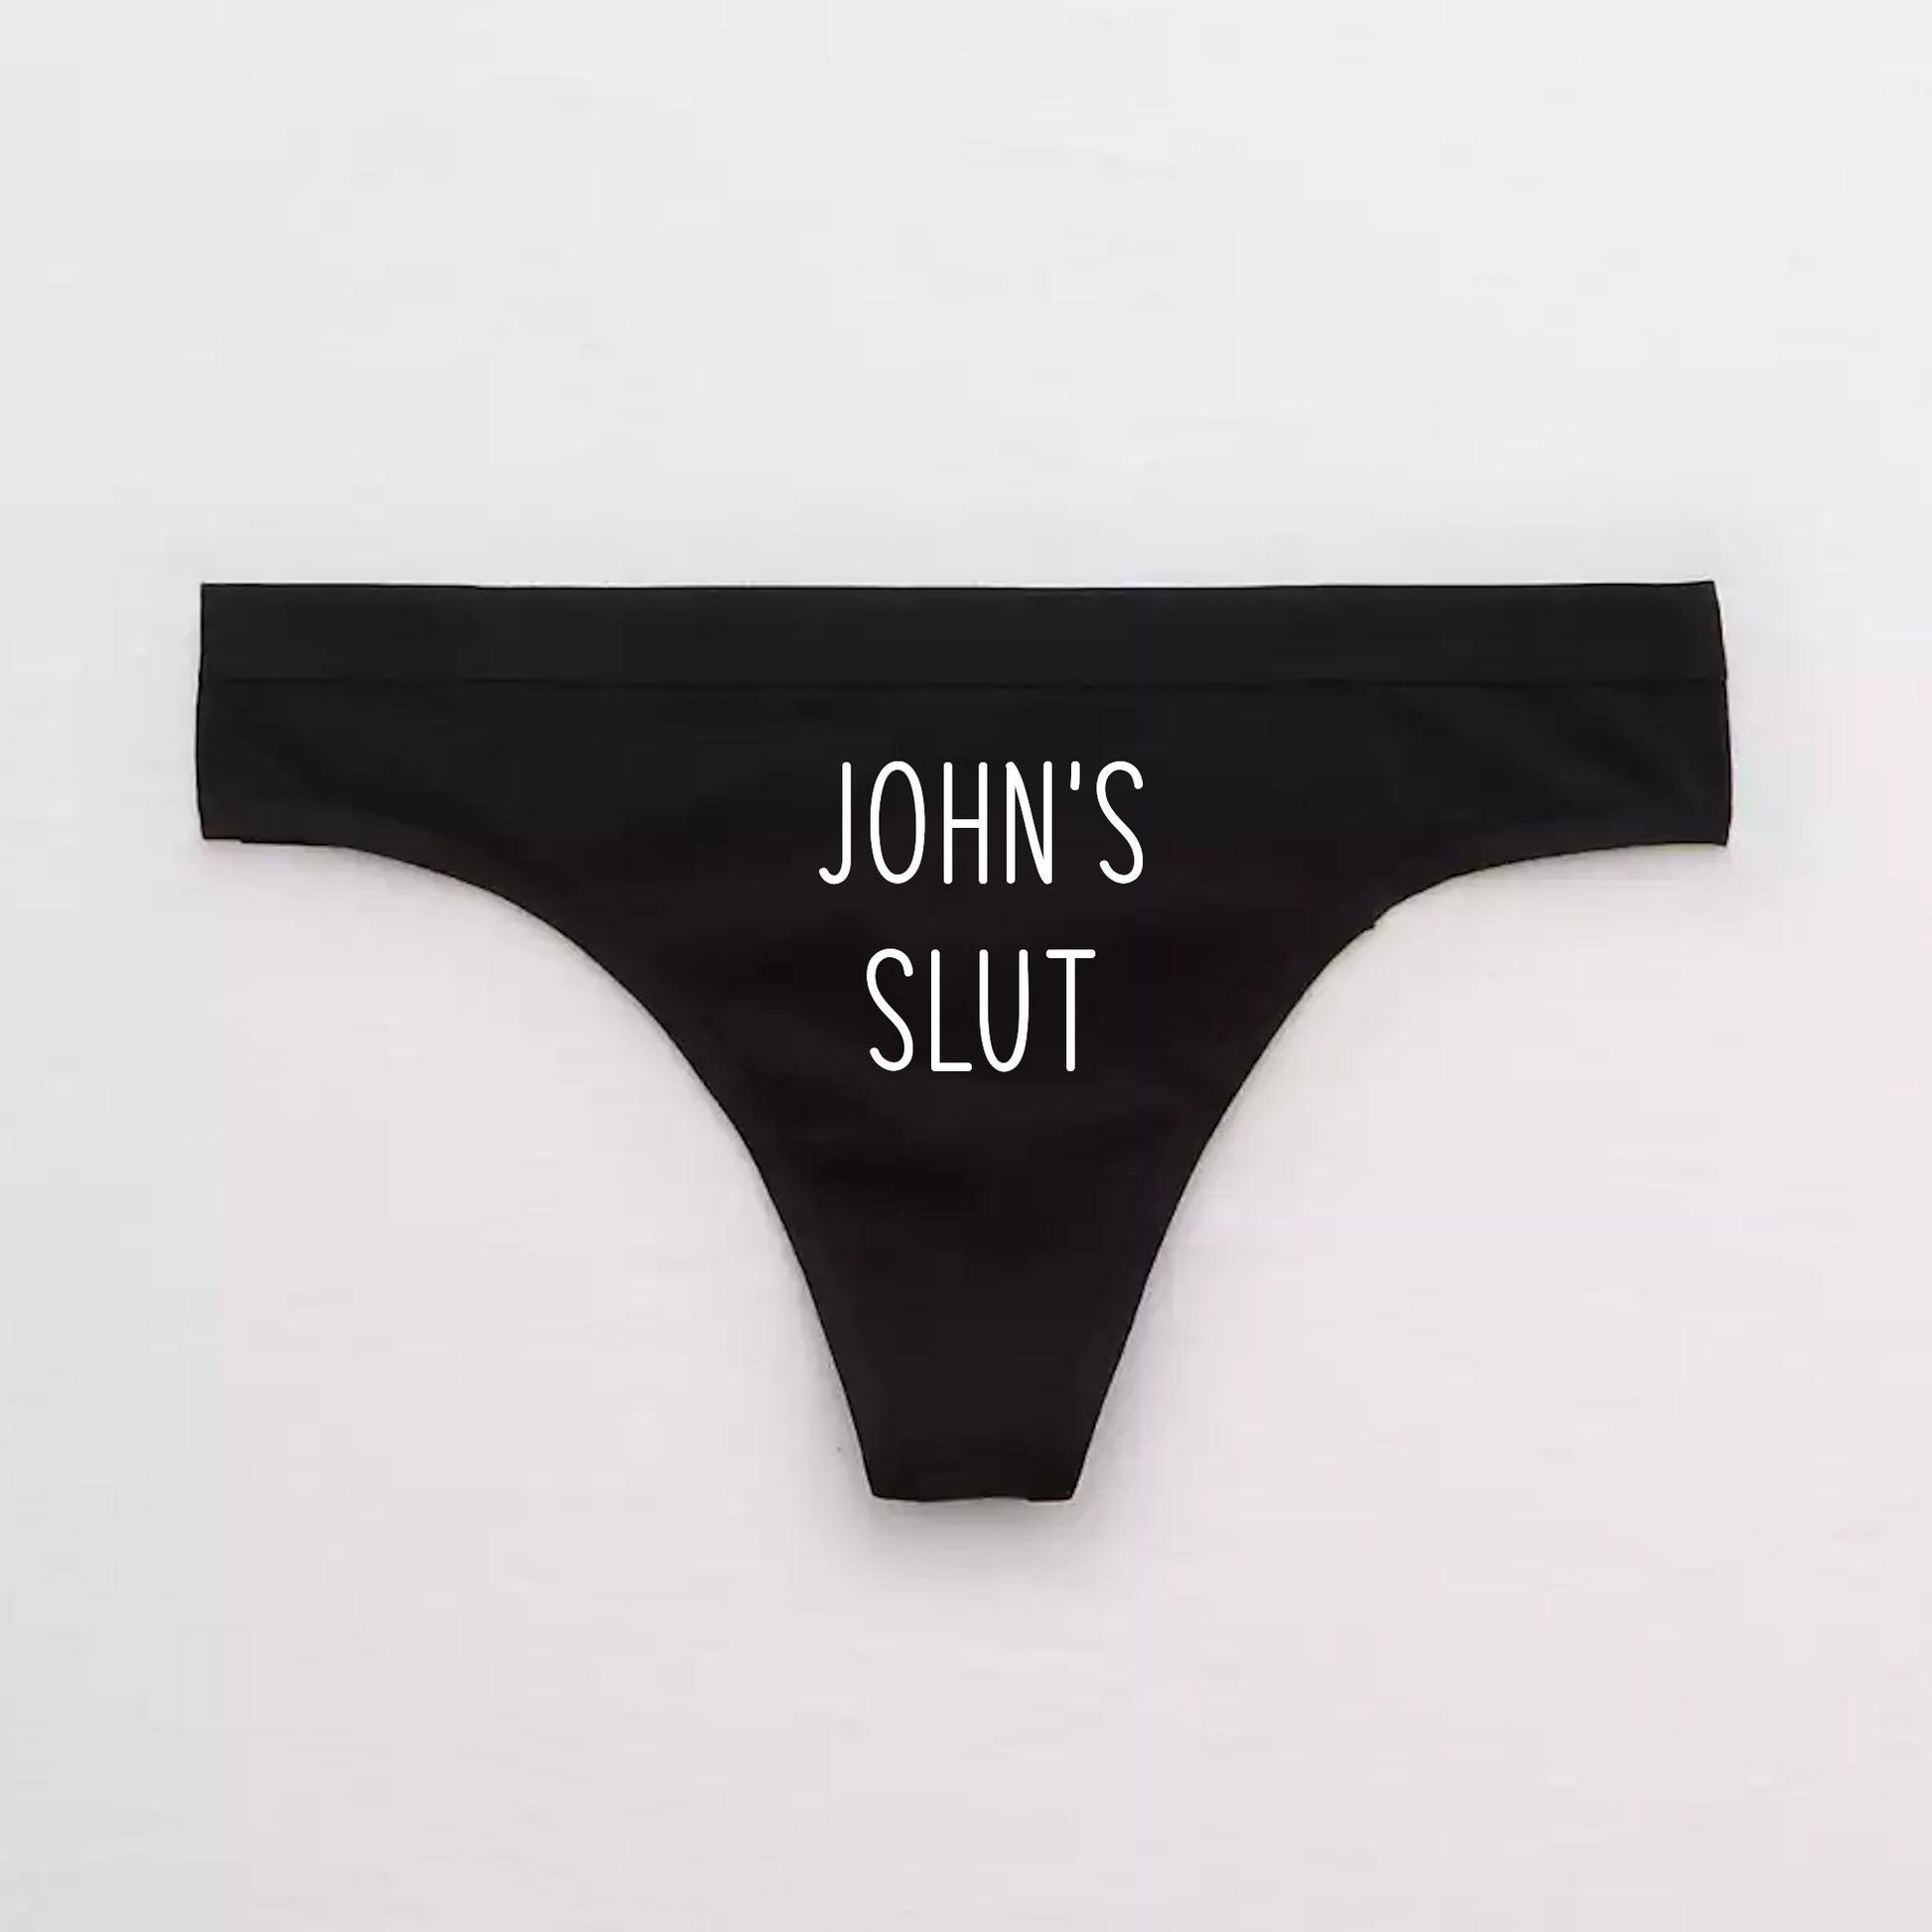 Names Slut Personalized Panties